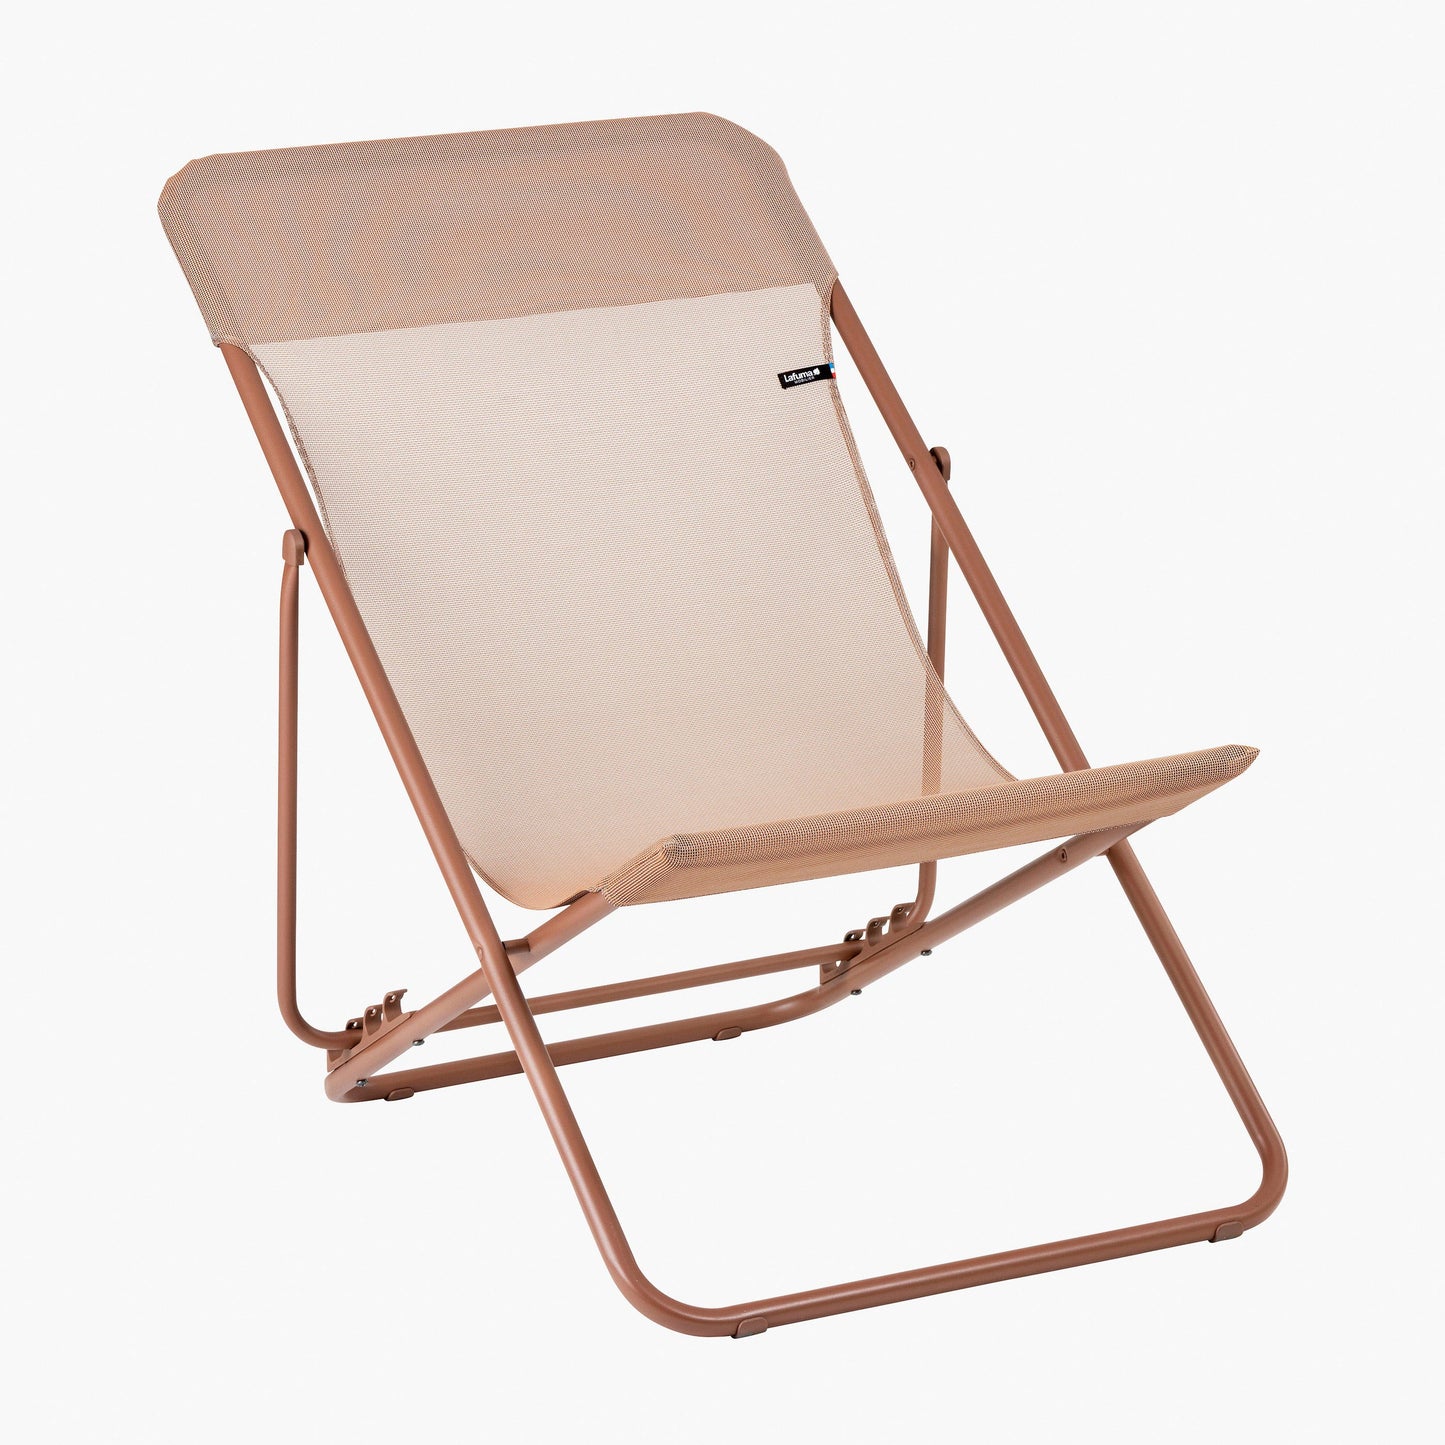 Chaise pliante BALCONY Lafuma Mobilier - 4 coloris